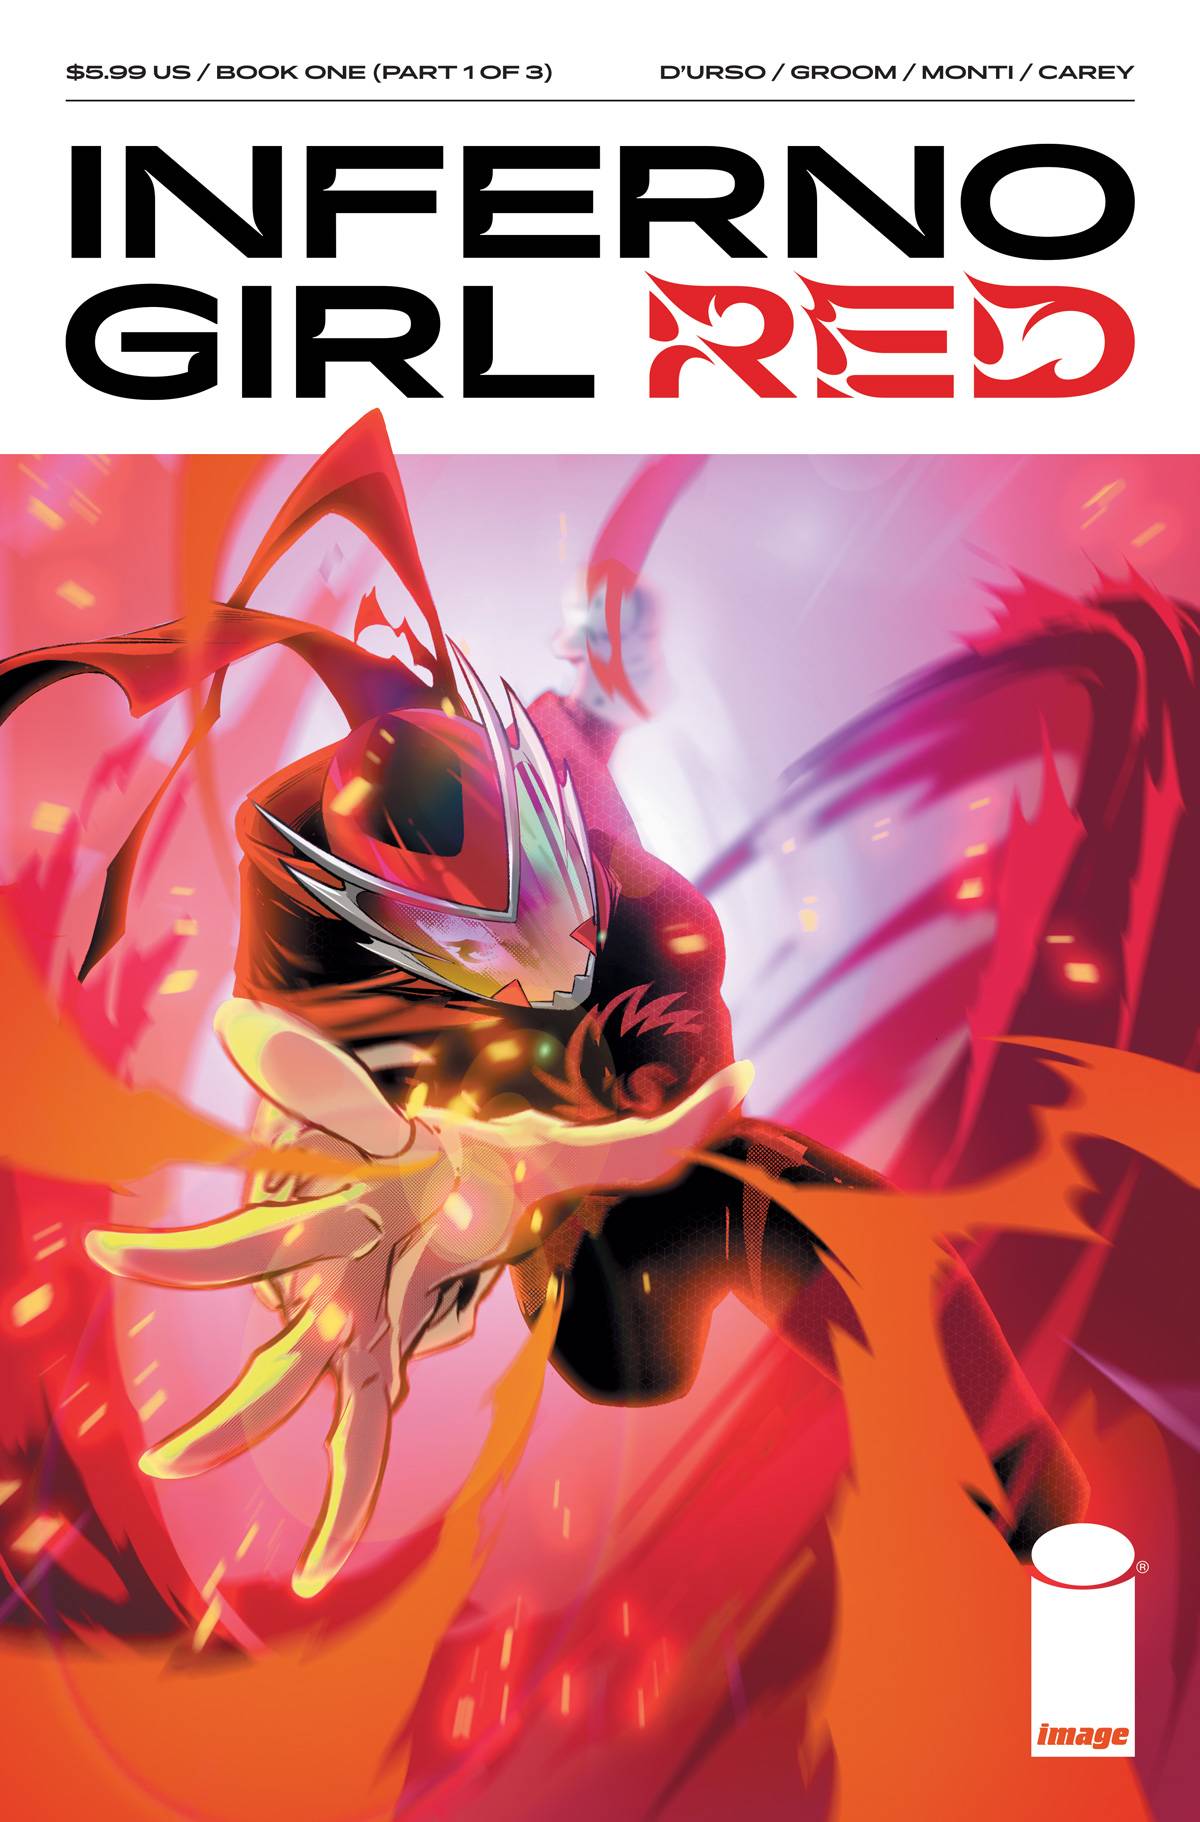 INFERNO GIRL RED BOOK ONE #1 (OF 3) CVR B MANNA